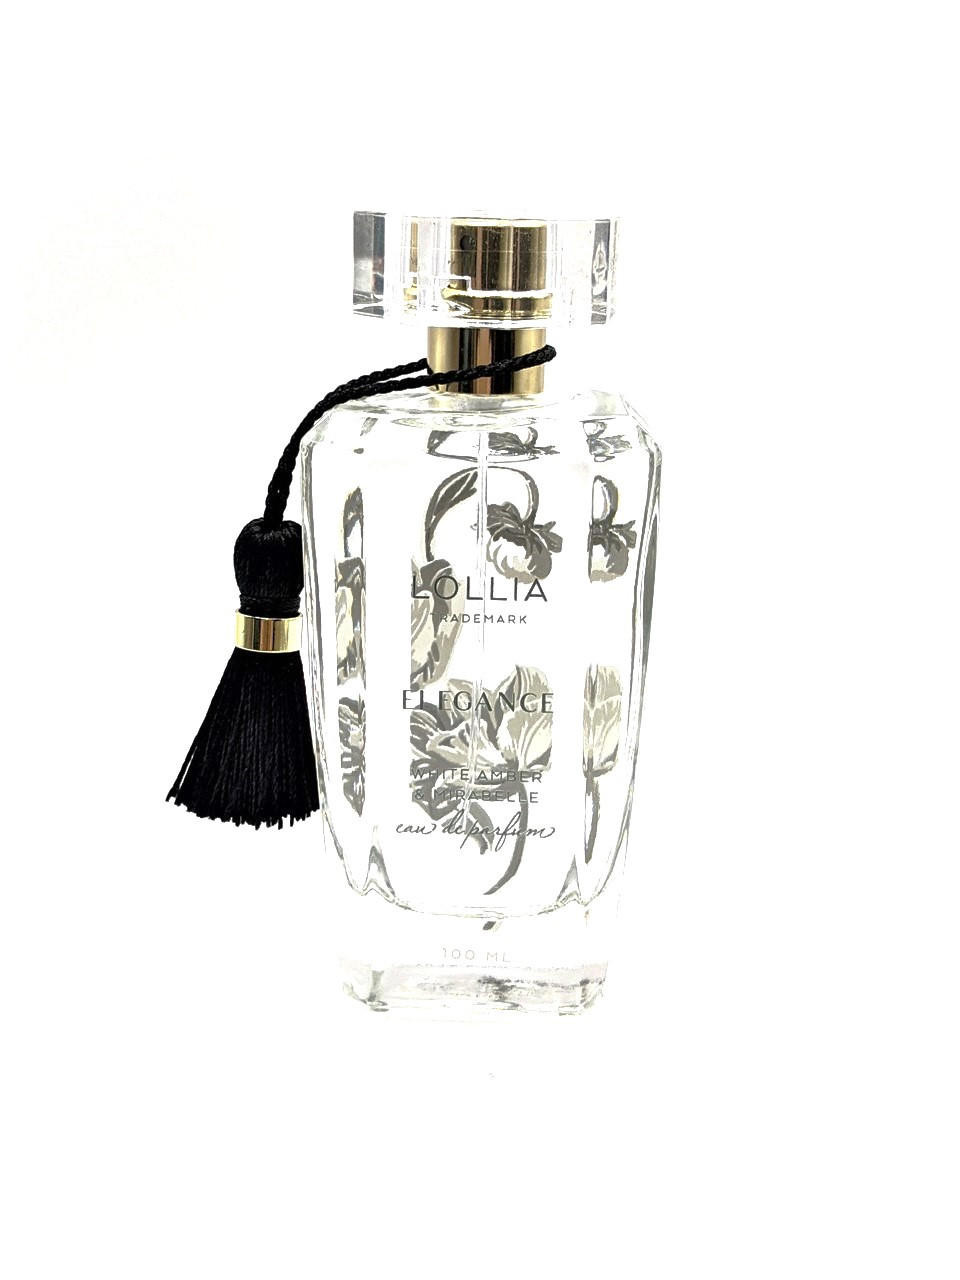 Elegance De Parfum, 100ml. - Ullman's and Beauty